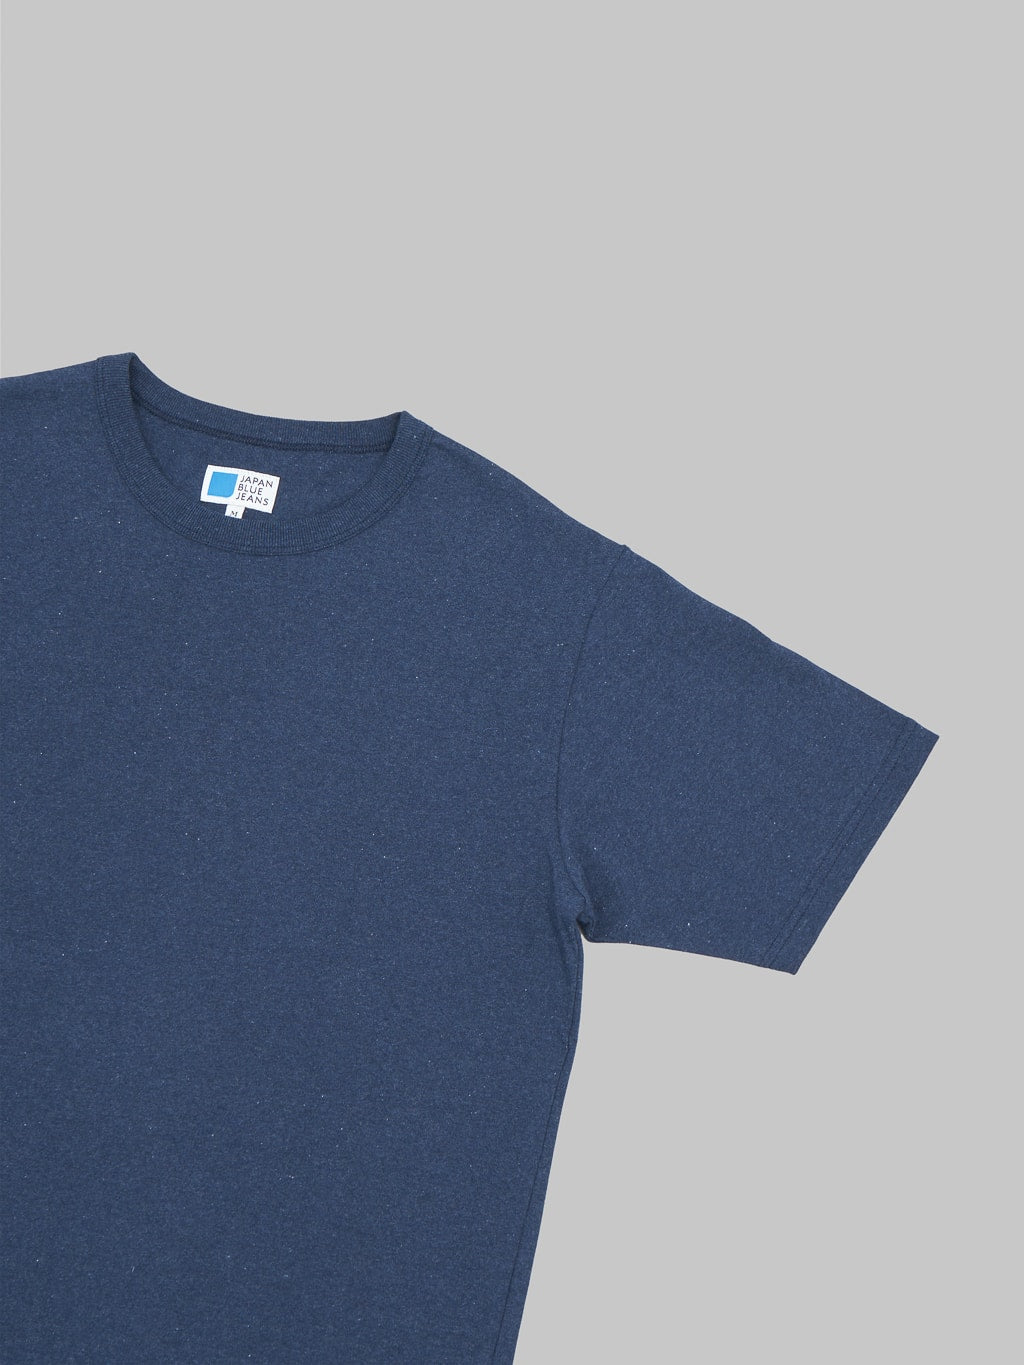 Japan Blue Recycled Denim Tshirt Dark Indigo sleeve